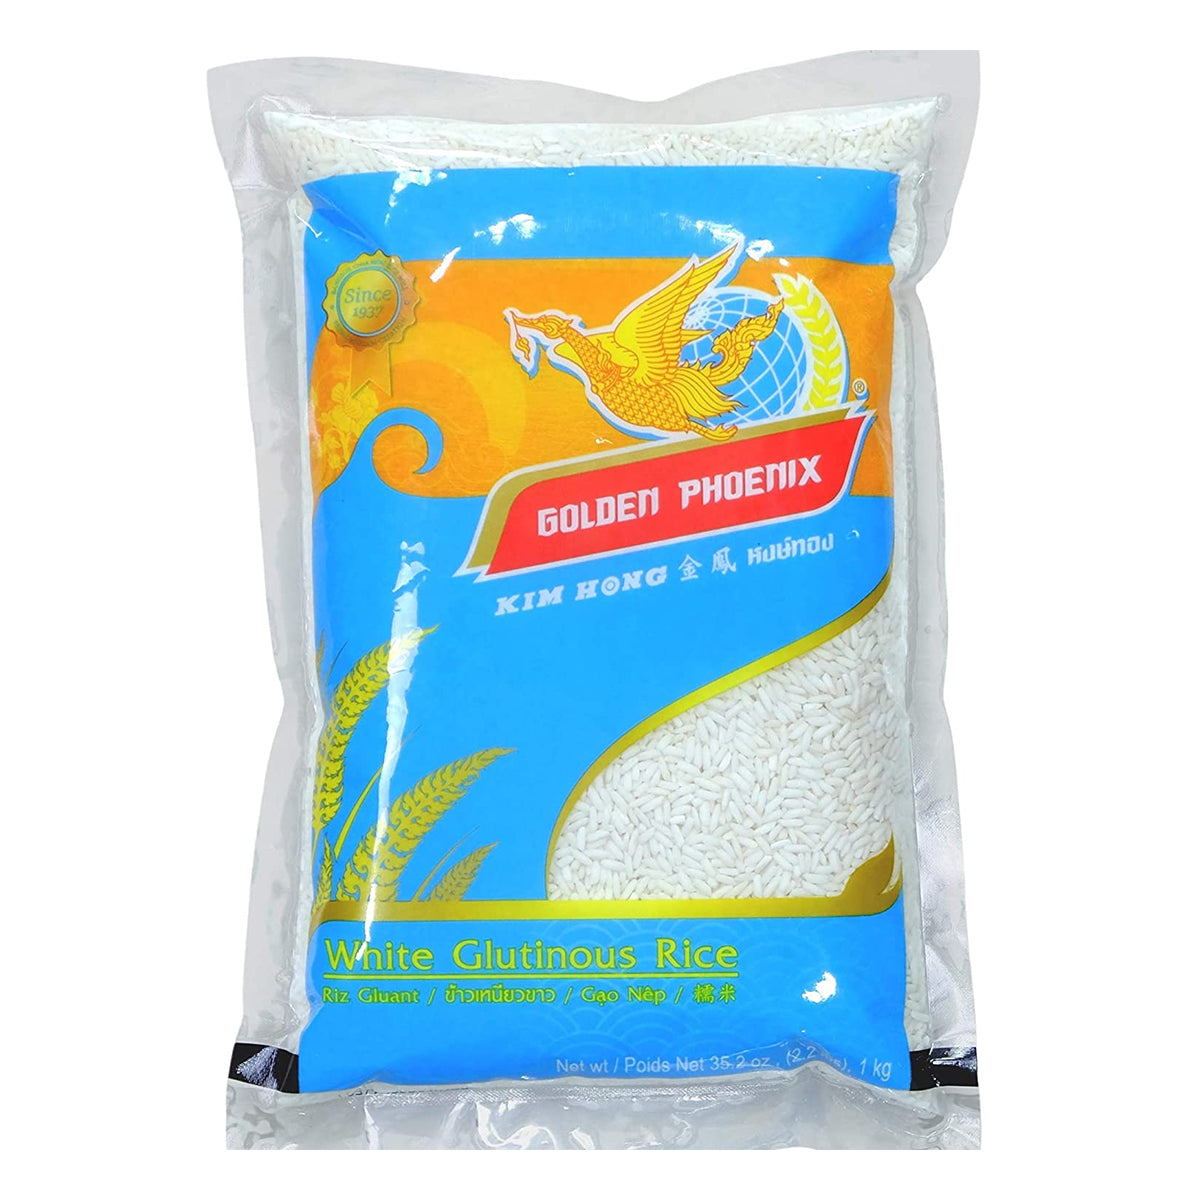 golden phoenix white glutinous rice - 2.2lb